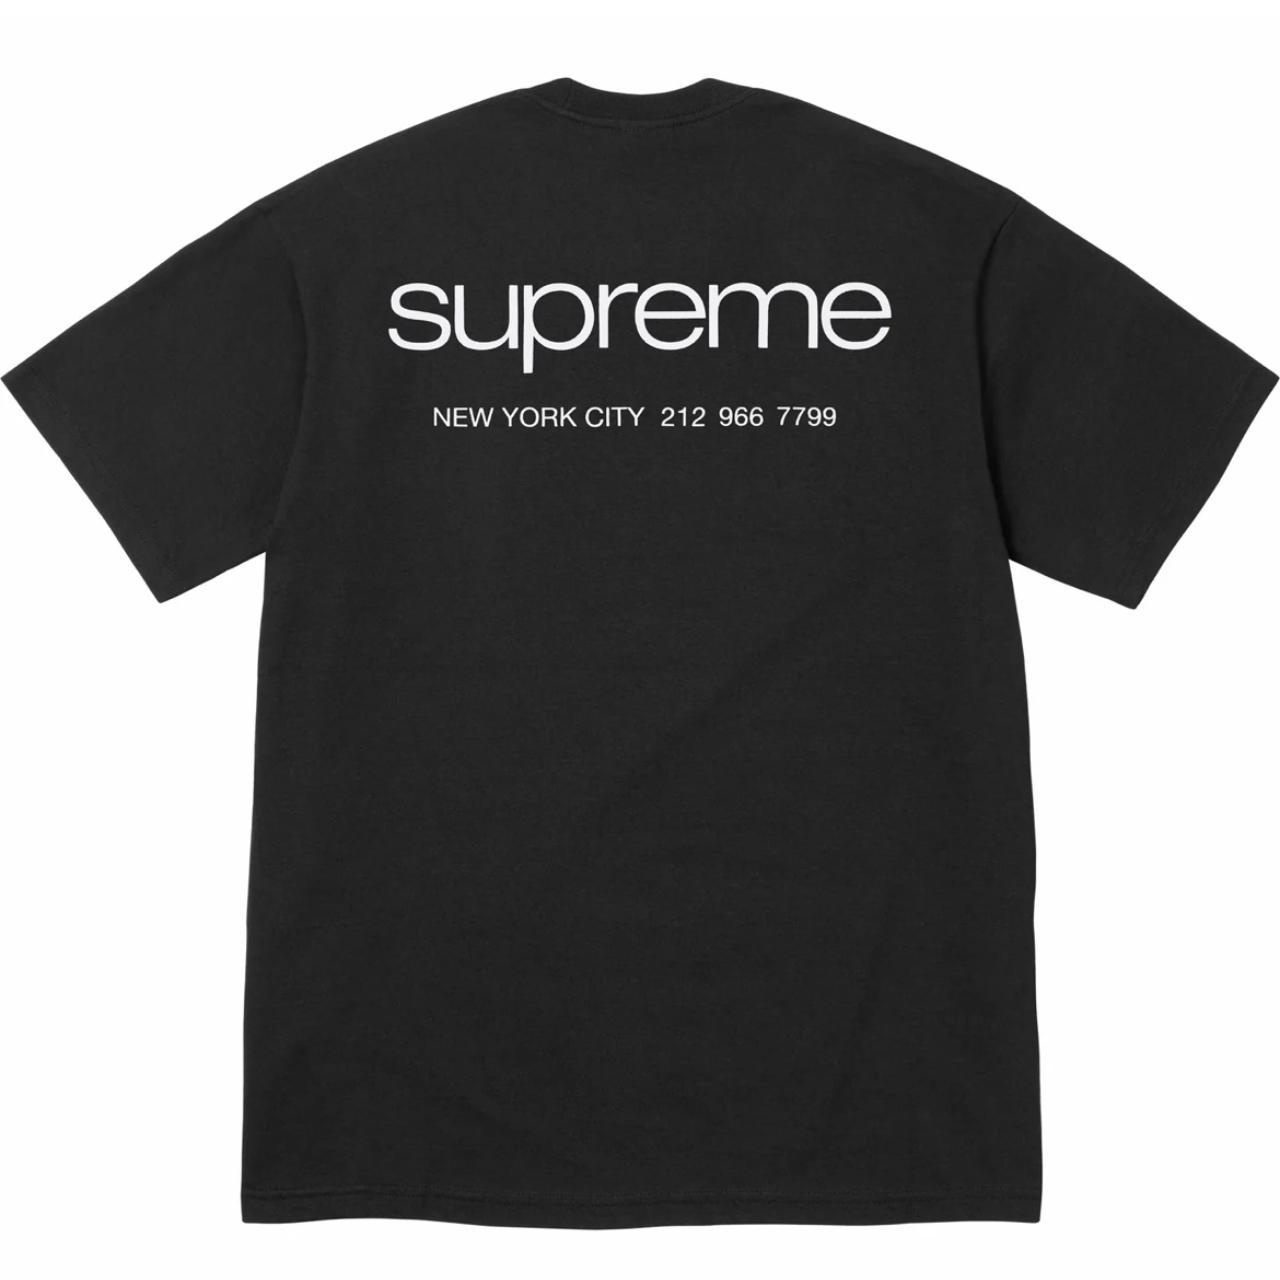 Supreme NYC Tee / Tshirt Size Small Brand new -... - Depop